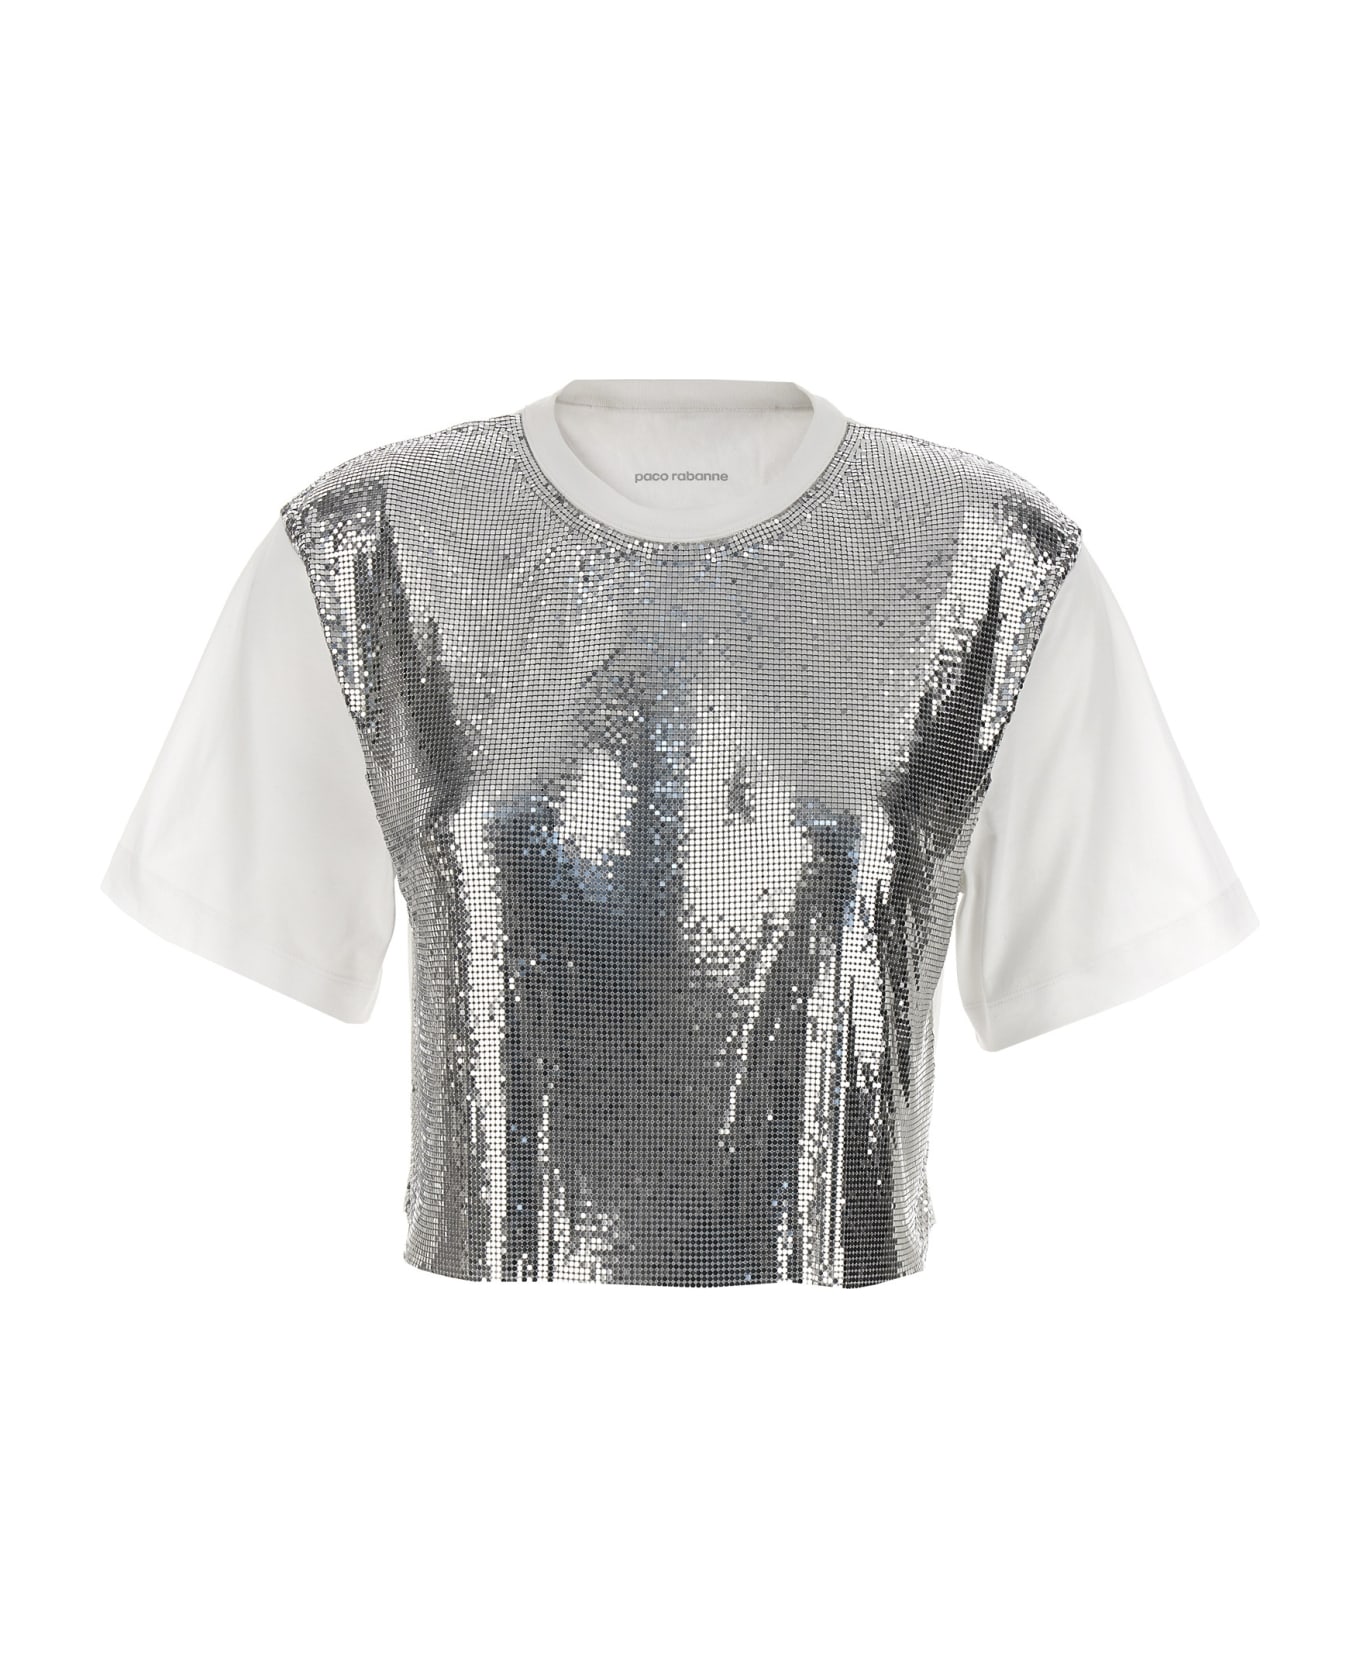 Paco Rabanne Metal Mesh T-shirt - Silver